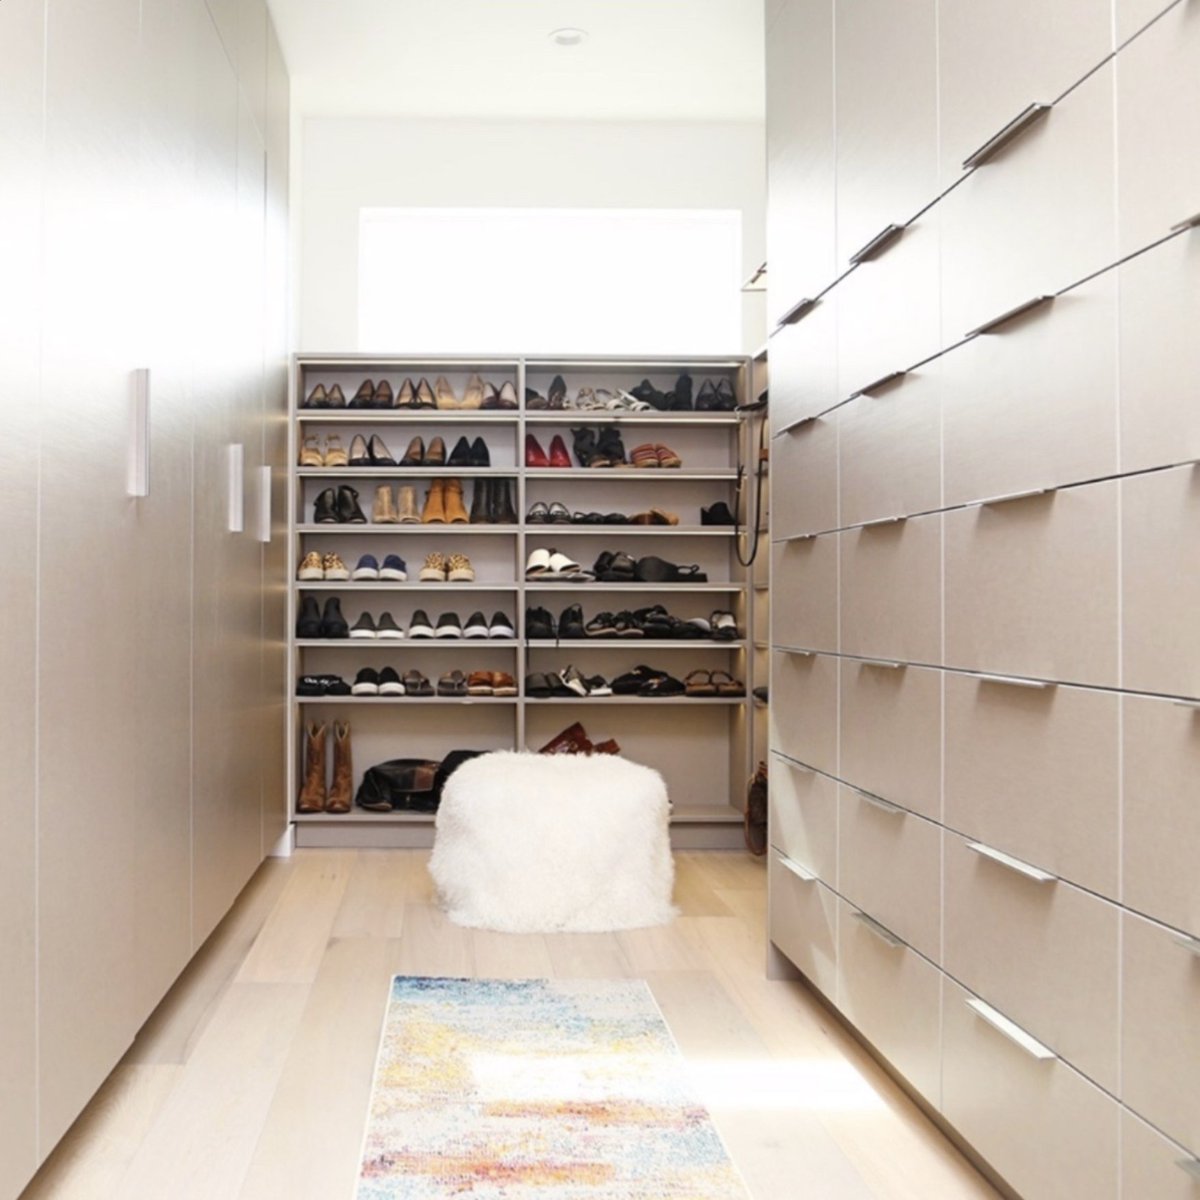 So many space maximizing options. Rethink your wardrobe.

#elitecabinetstulsa
#tulsa
#tulsadesign
#interiordesign
#tulsahomes
#organizedcloset
#moderndesign
#moderncabinets
#closetcabinets
#loveyourcloset
#closet
#closetdesign
#storageideas
#cabinetmaker